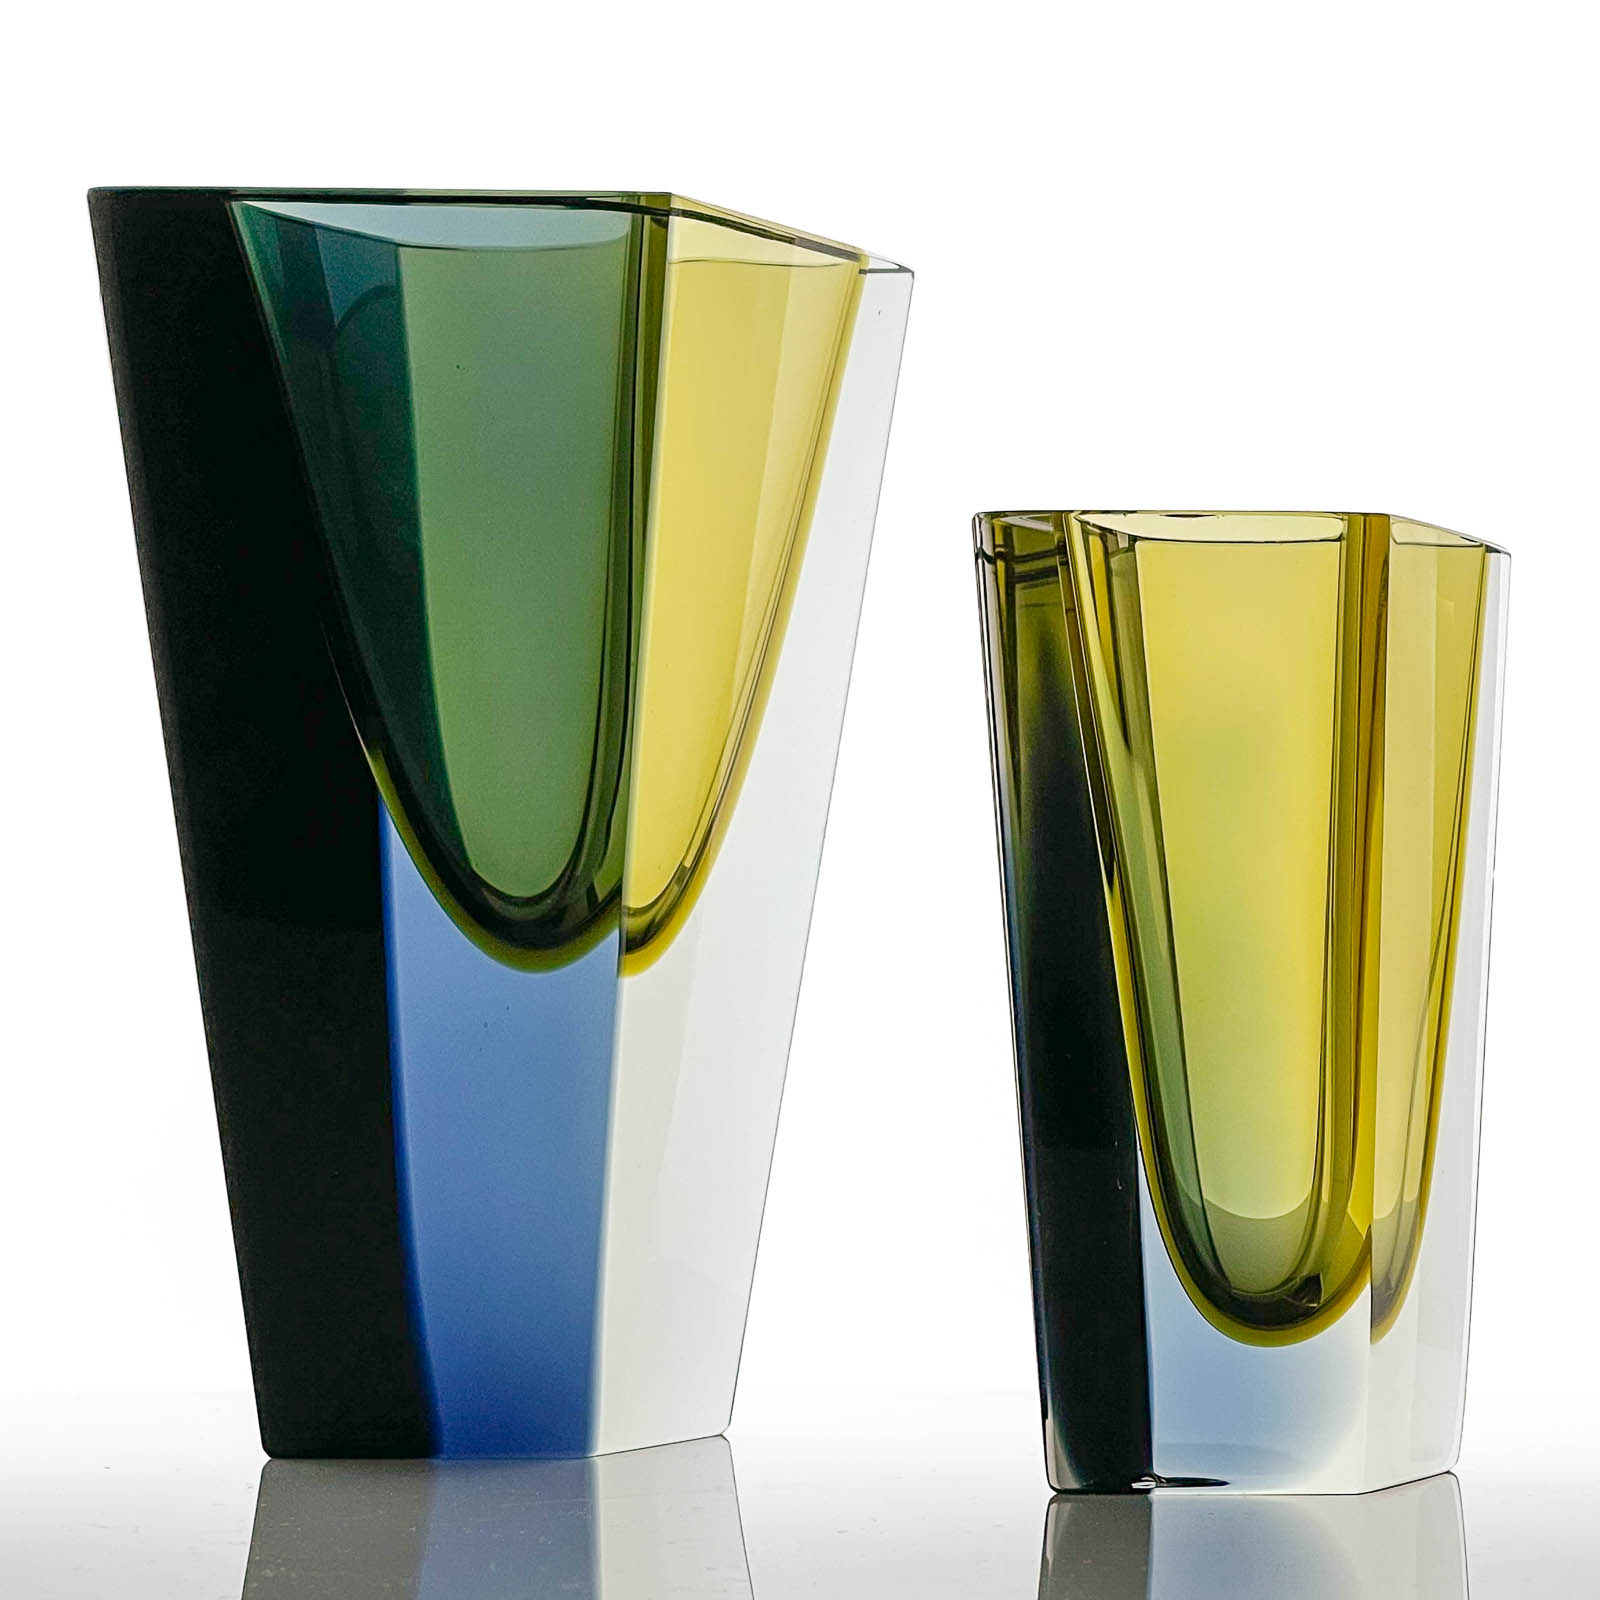 Kaj Franck - Two glass Art-objects "Prisma", model KF215 - Nuutajärvi-Notsjö Finland